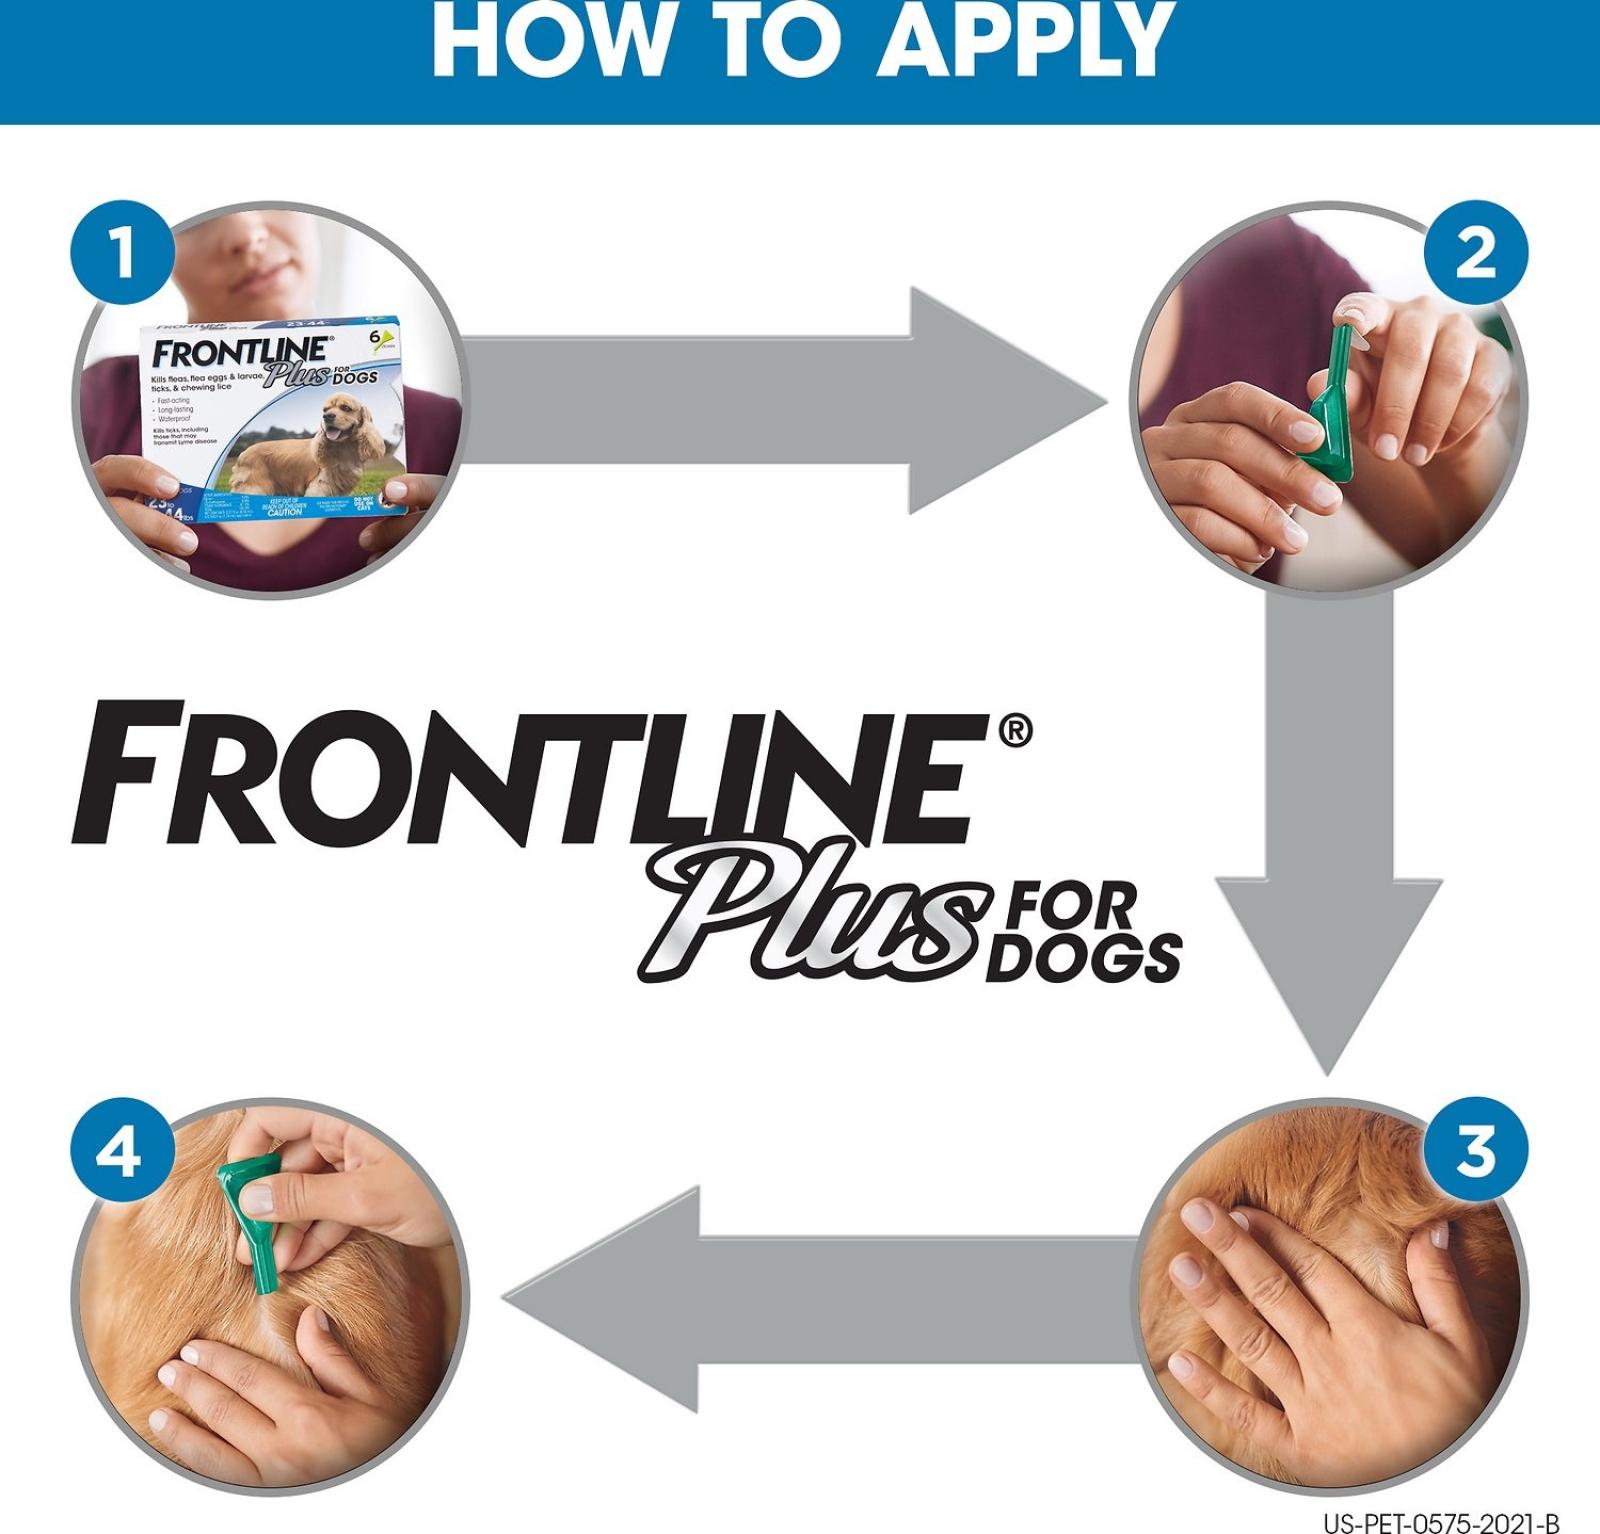 Frontline Plus Flea & Tick Spot Treatment for Dogs